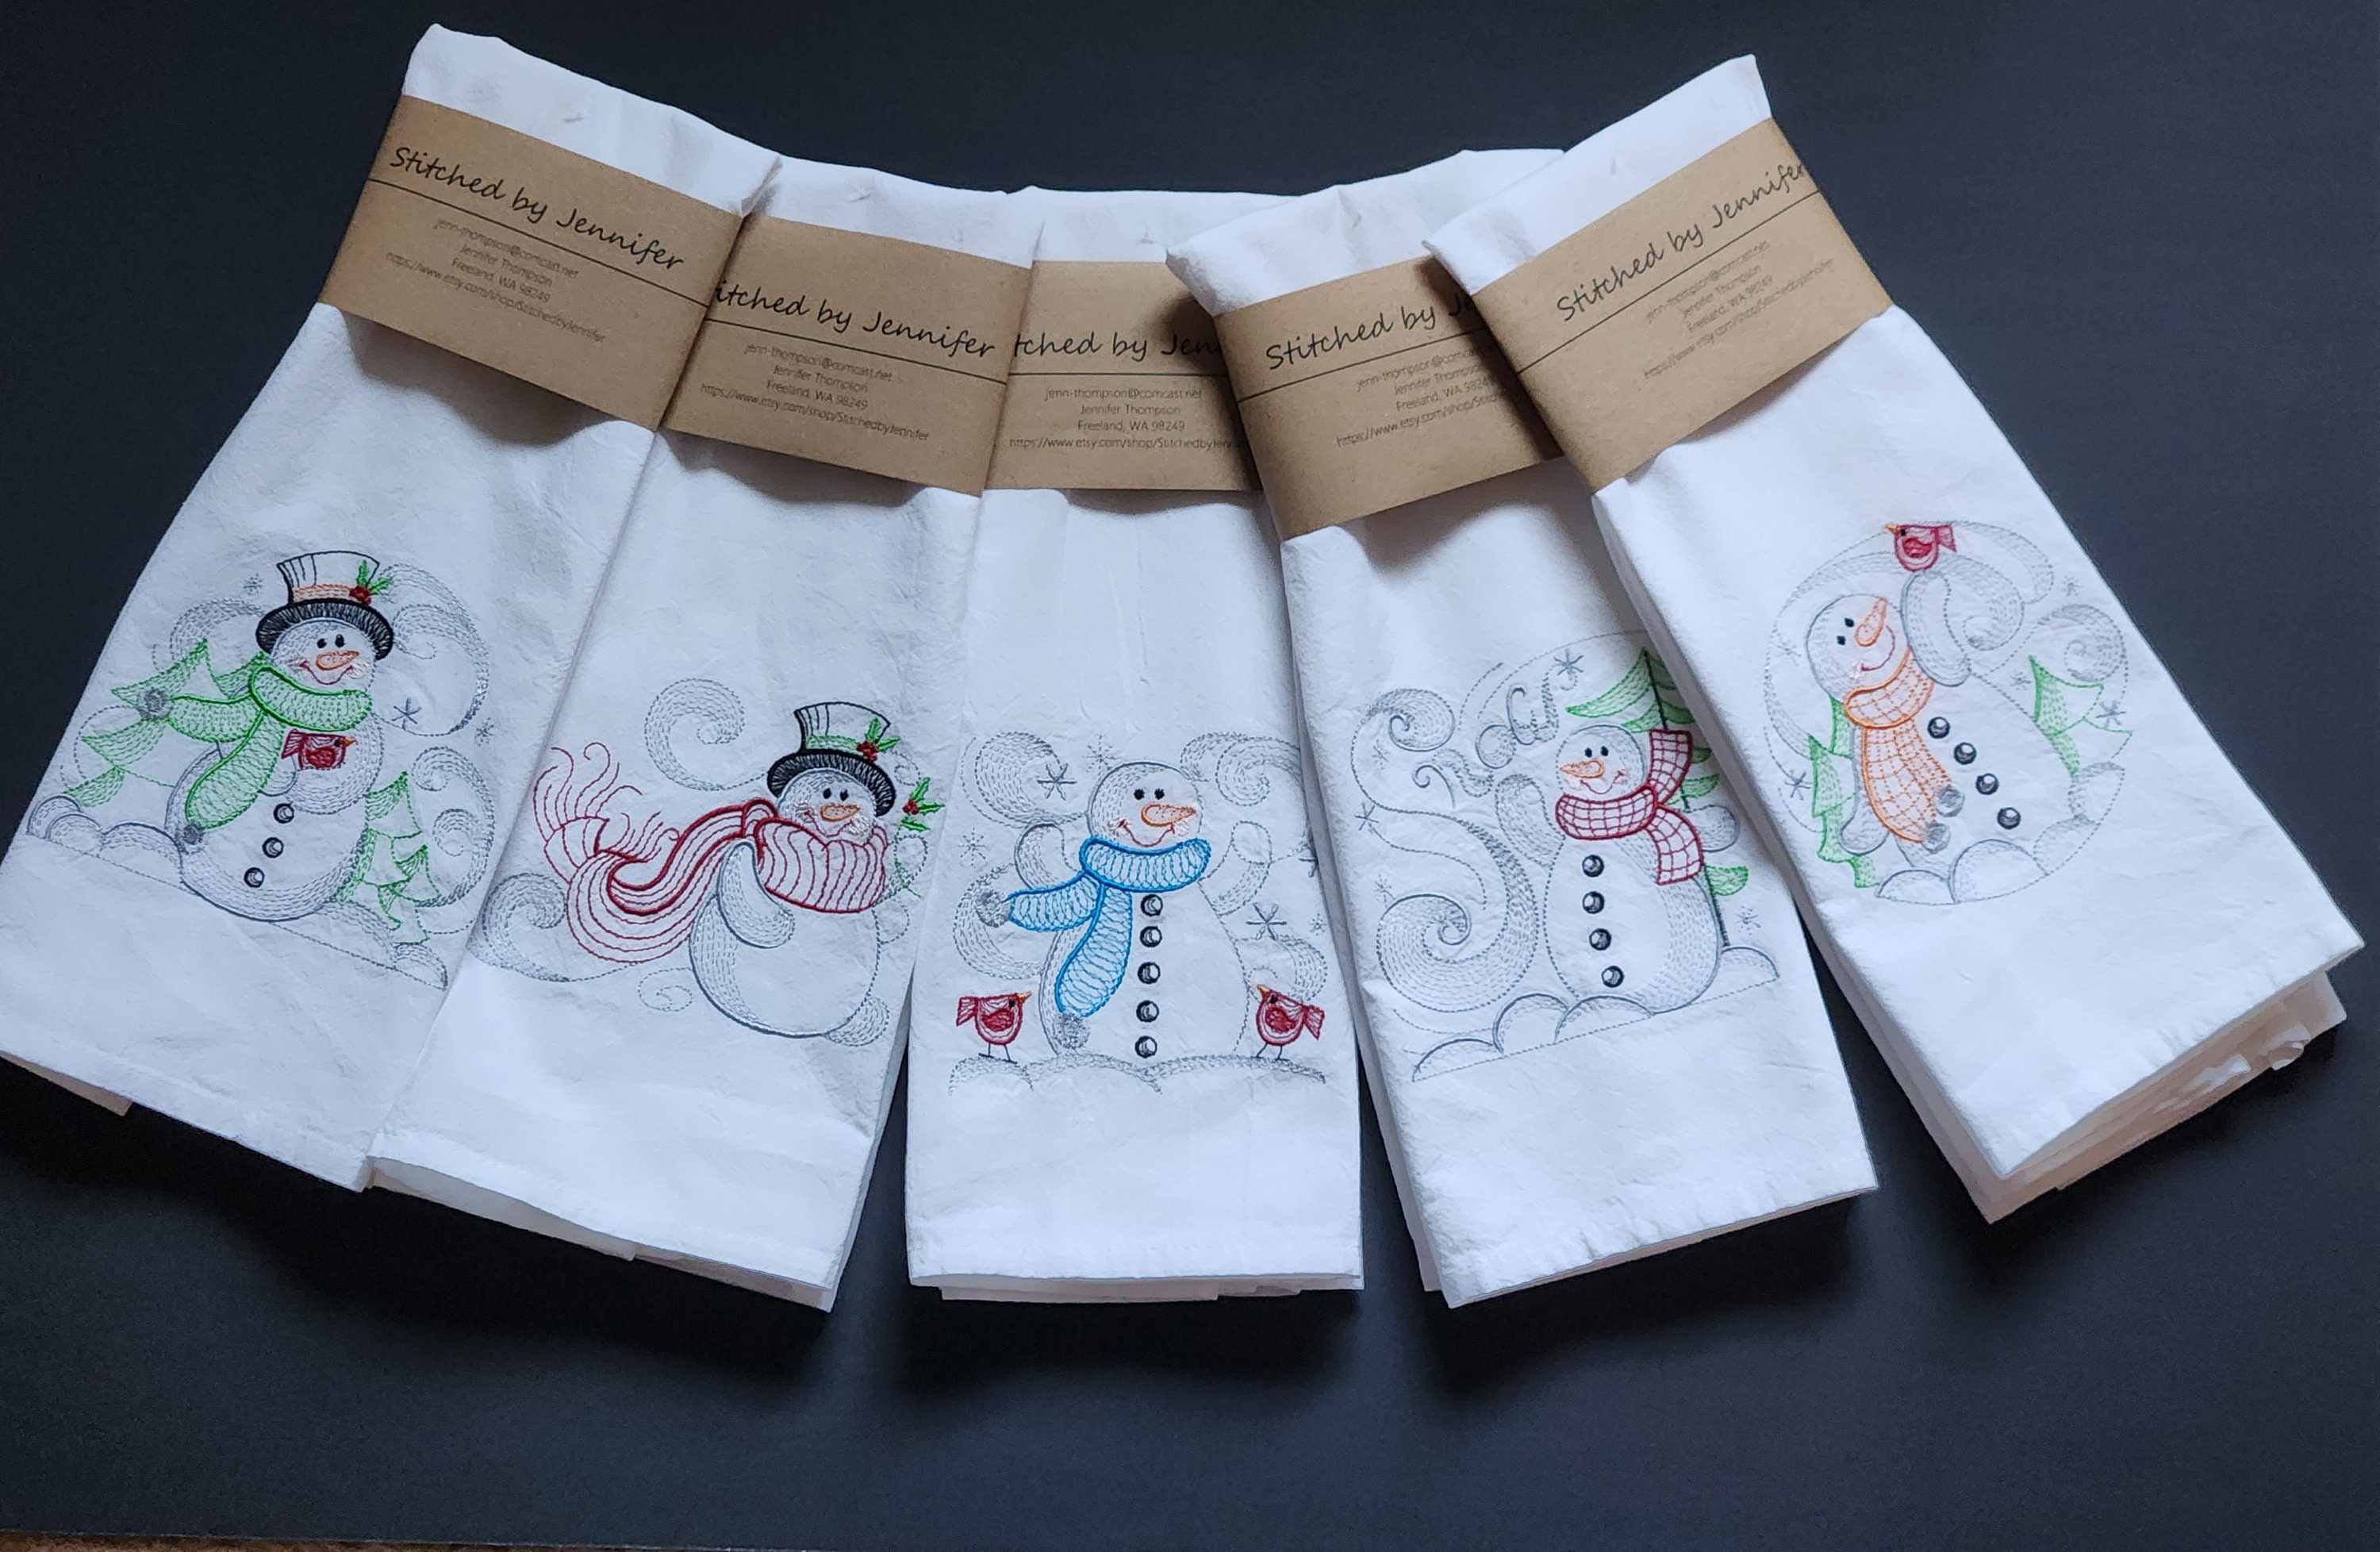 Christmas Tea Towel Set Cotton Snow Bell Design Gift Set Tea Towel - China  Christmas Gift and Tea Towels price